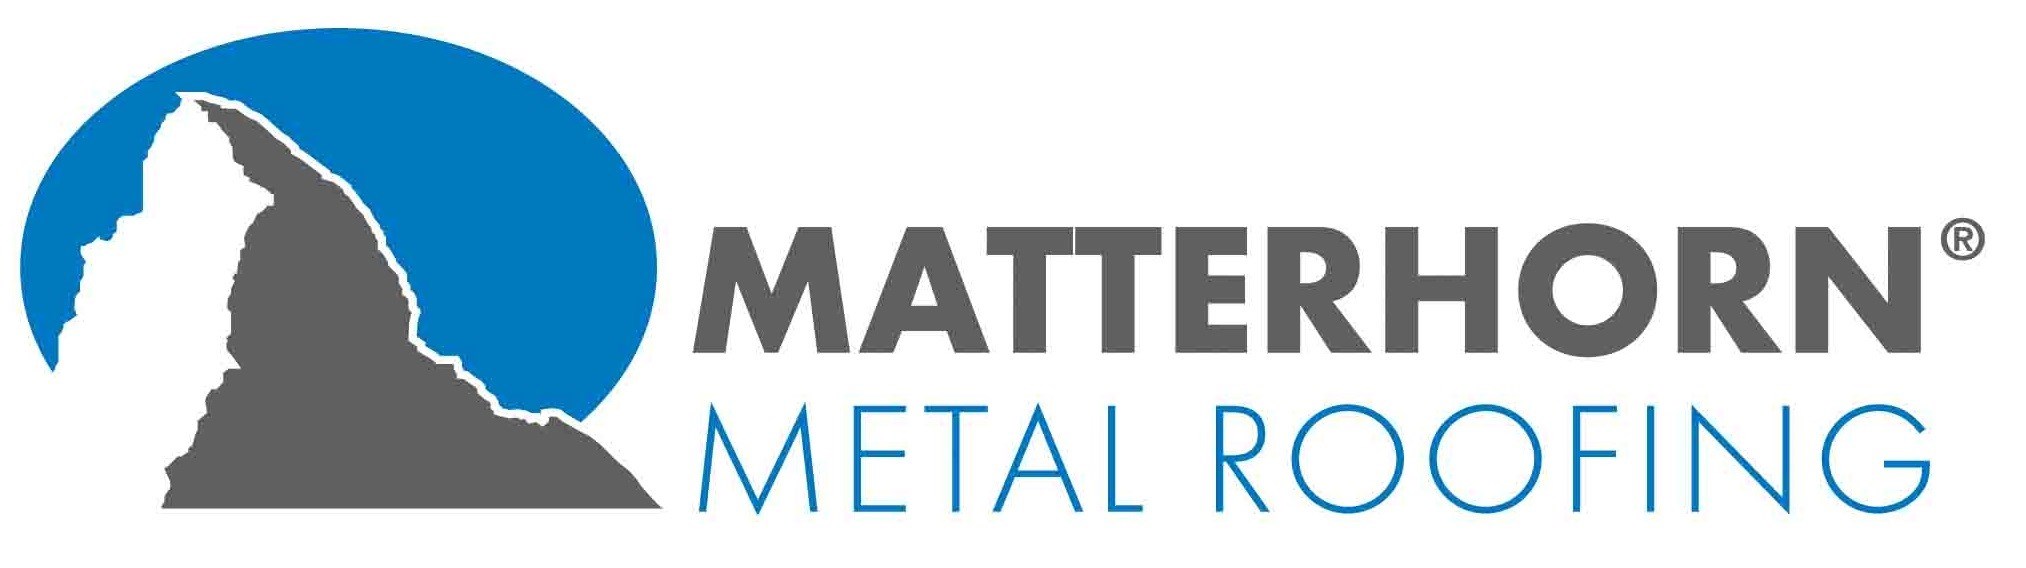 Matterhorn Metal Roofing